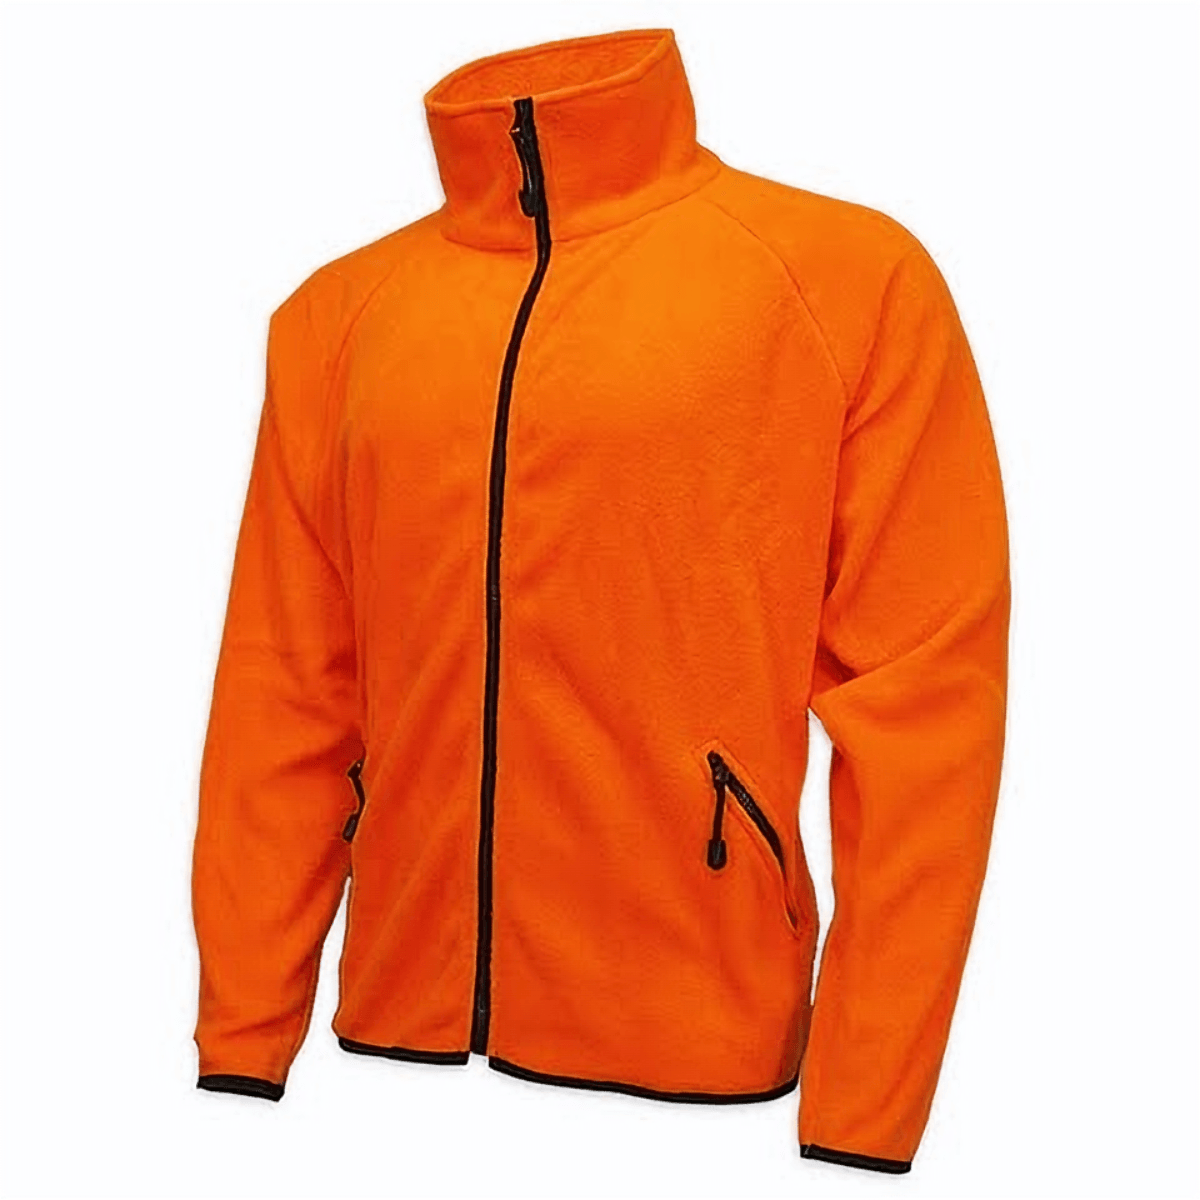 World Famous Sports Blaze Orange Fleece Jacket - Bobwards.com